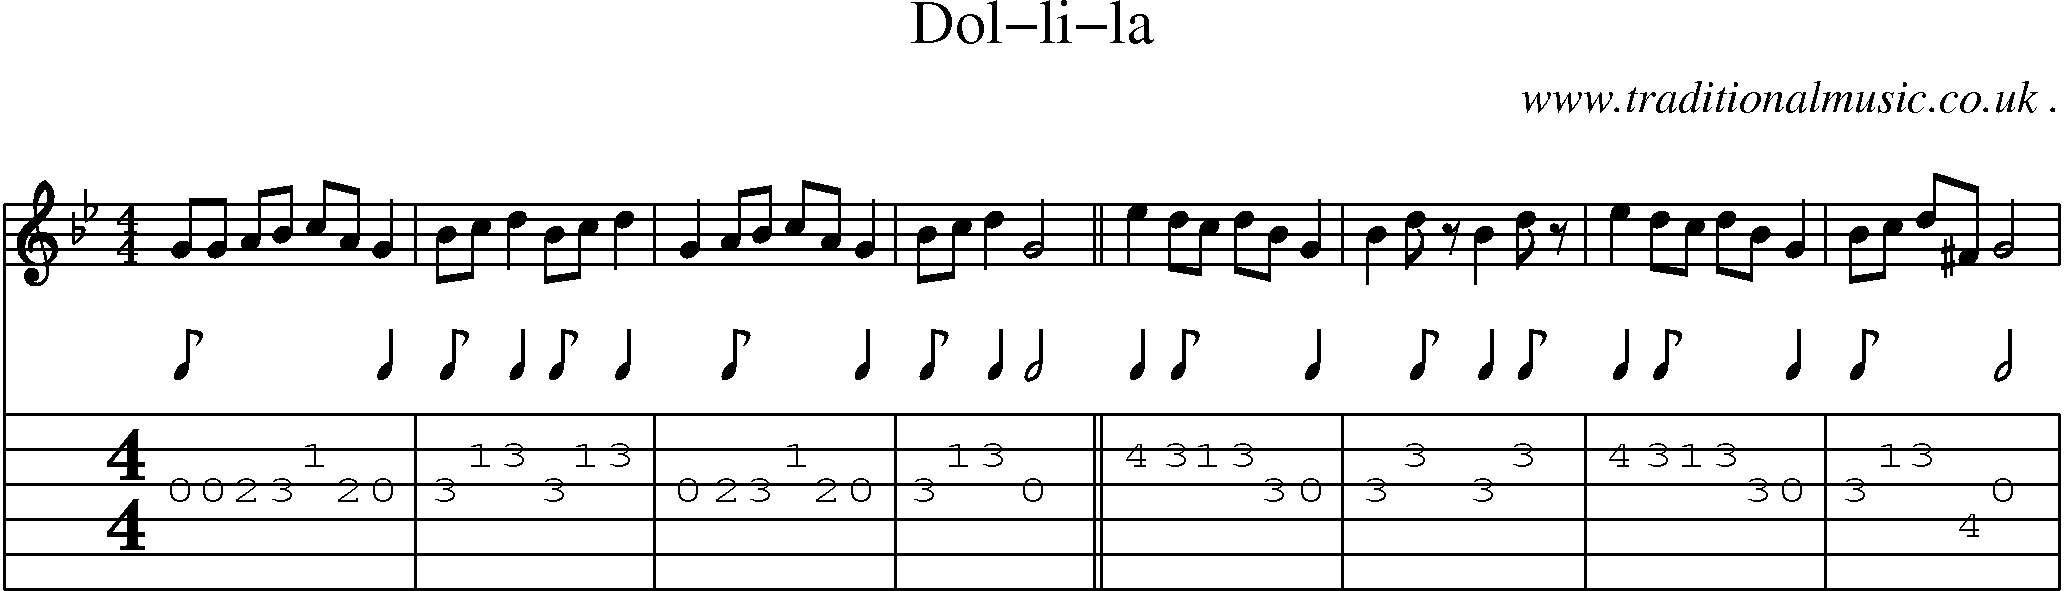 Sheet-Music and Guitar Tabs for Dol-li-la